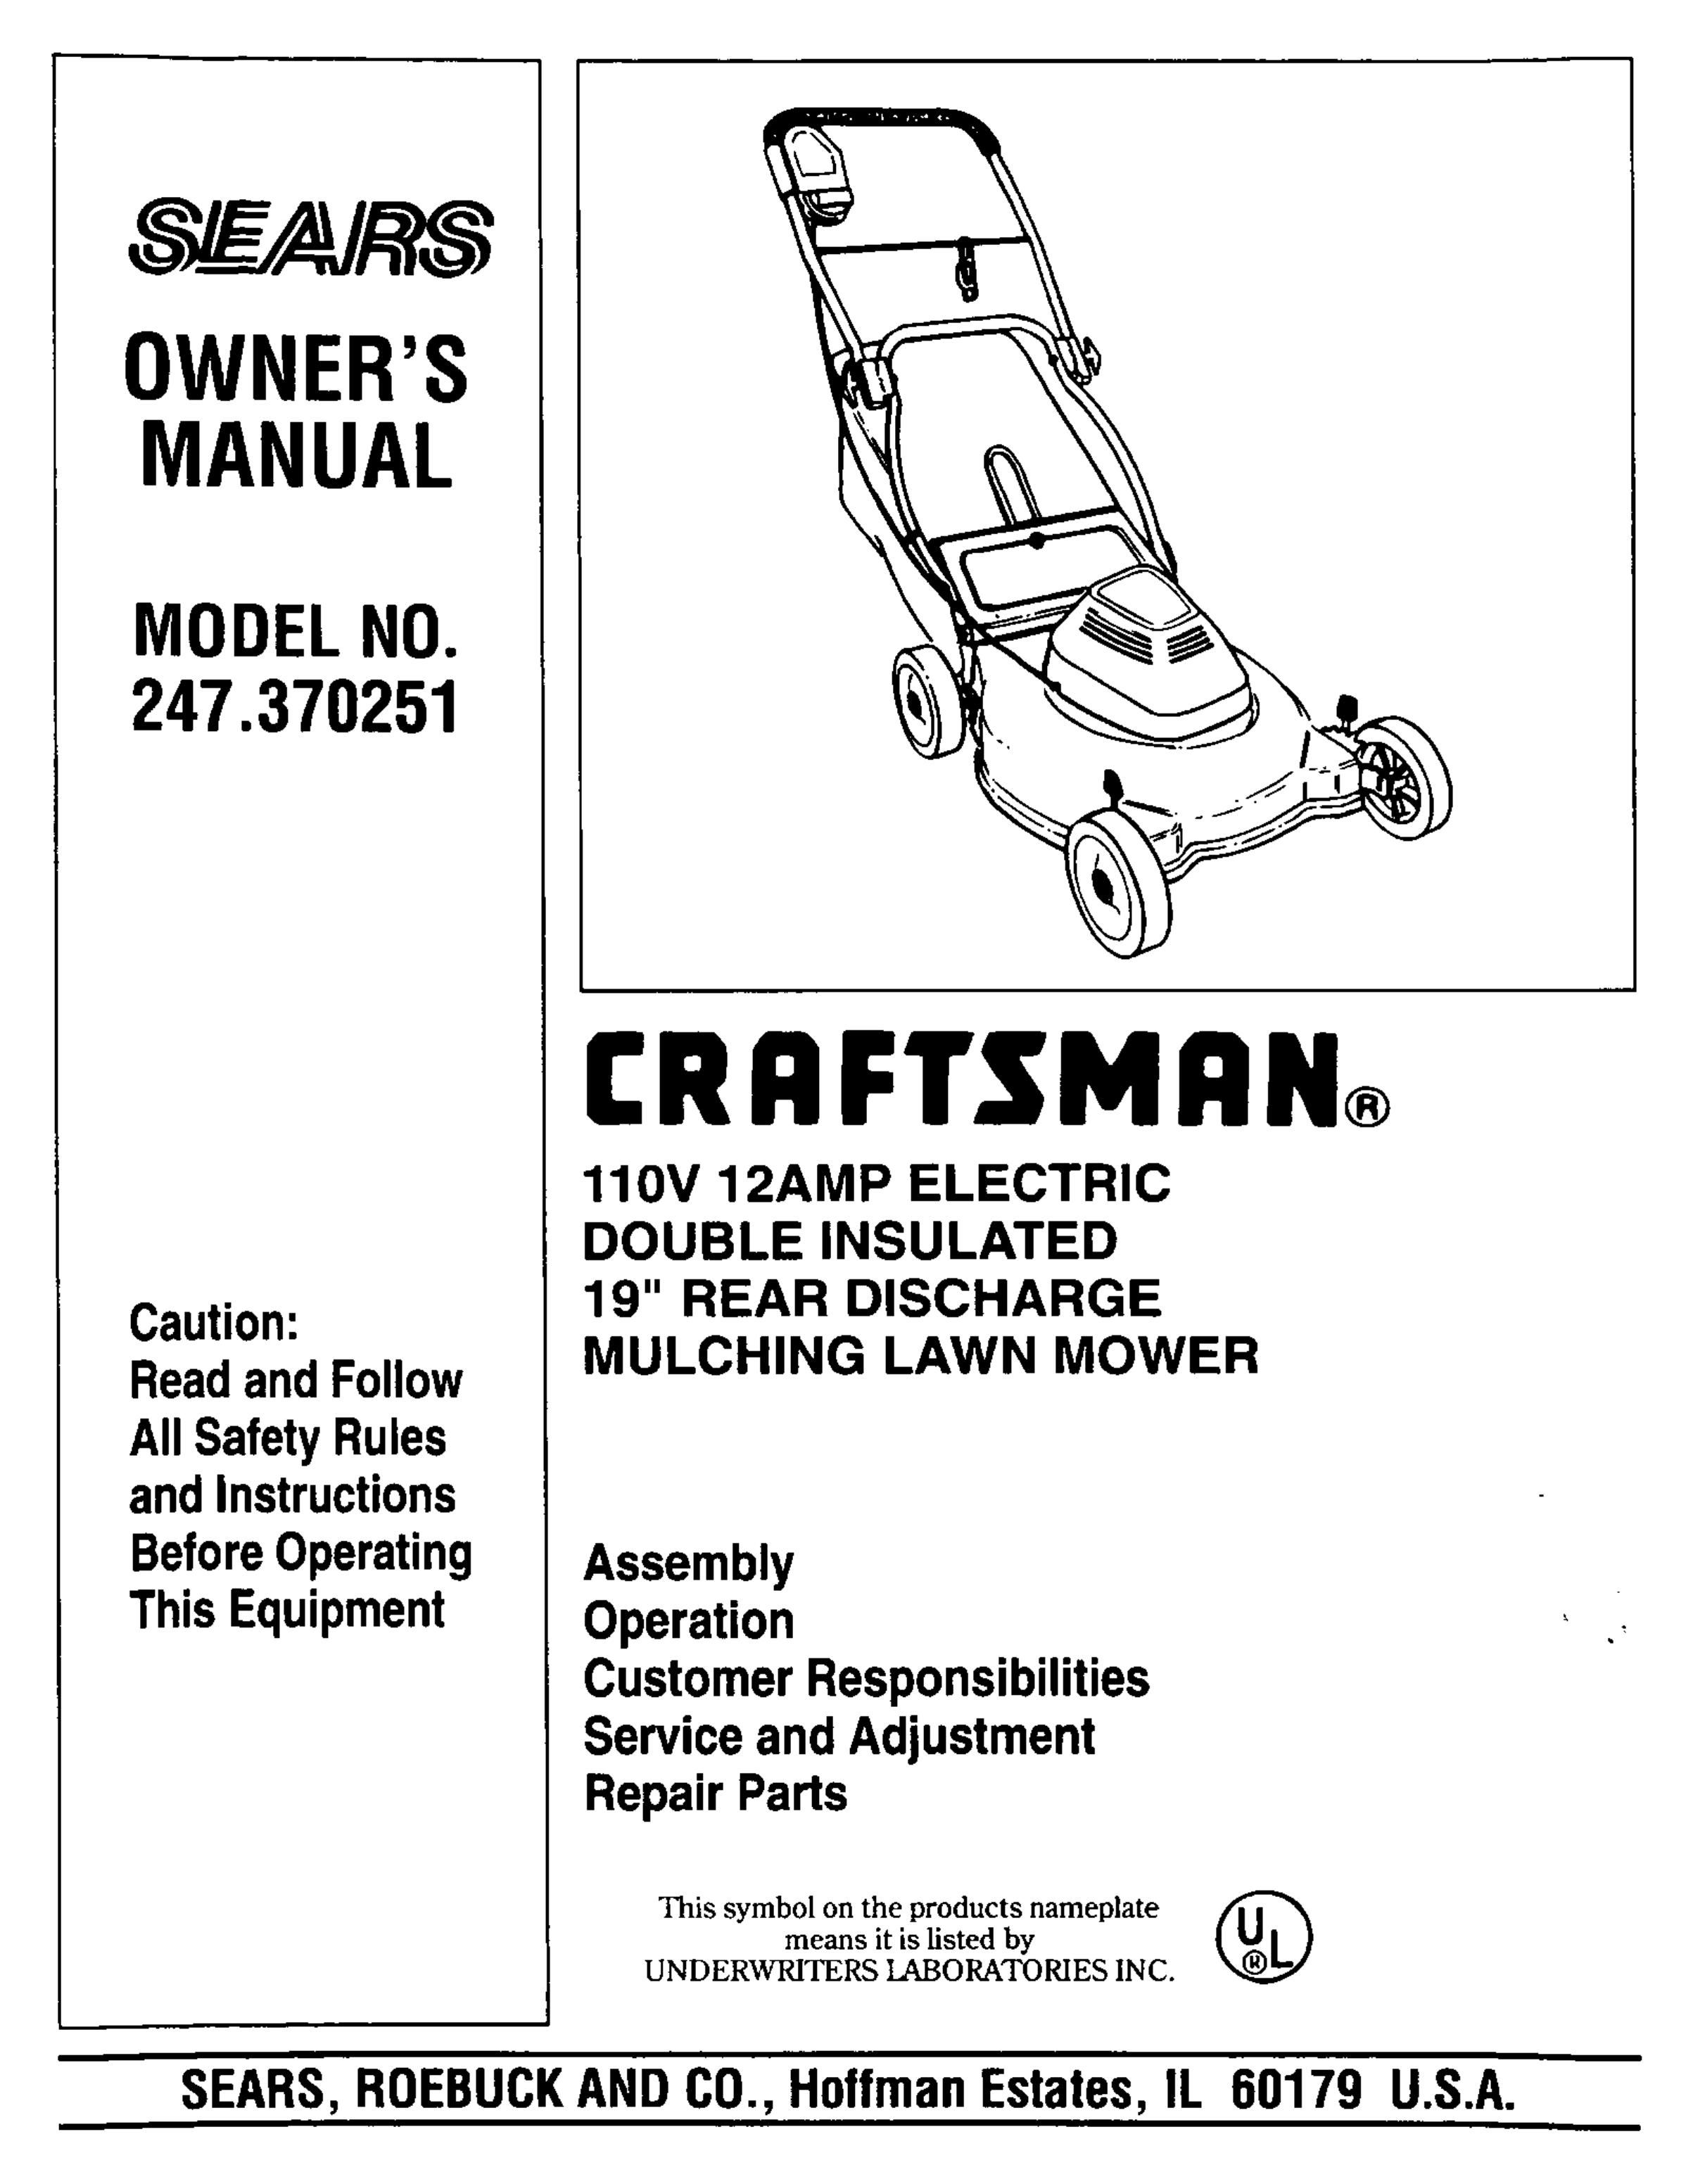 Craftsman 247.370251 Lawn Mower User Manual